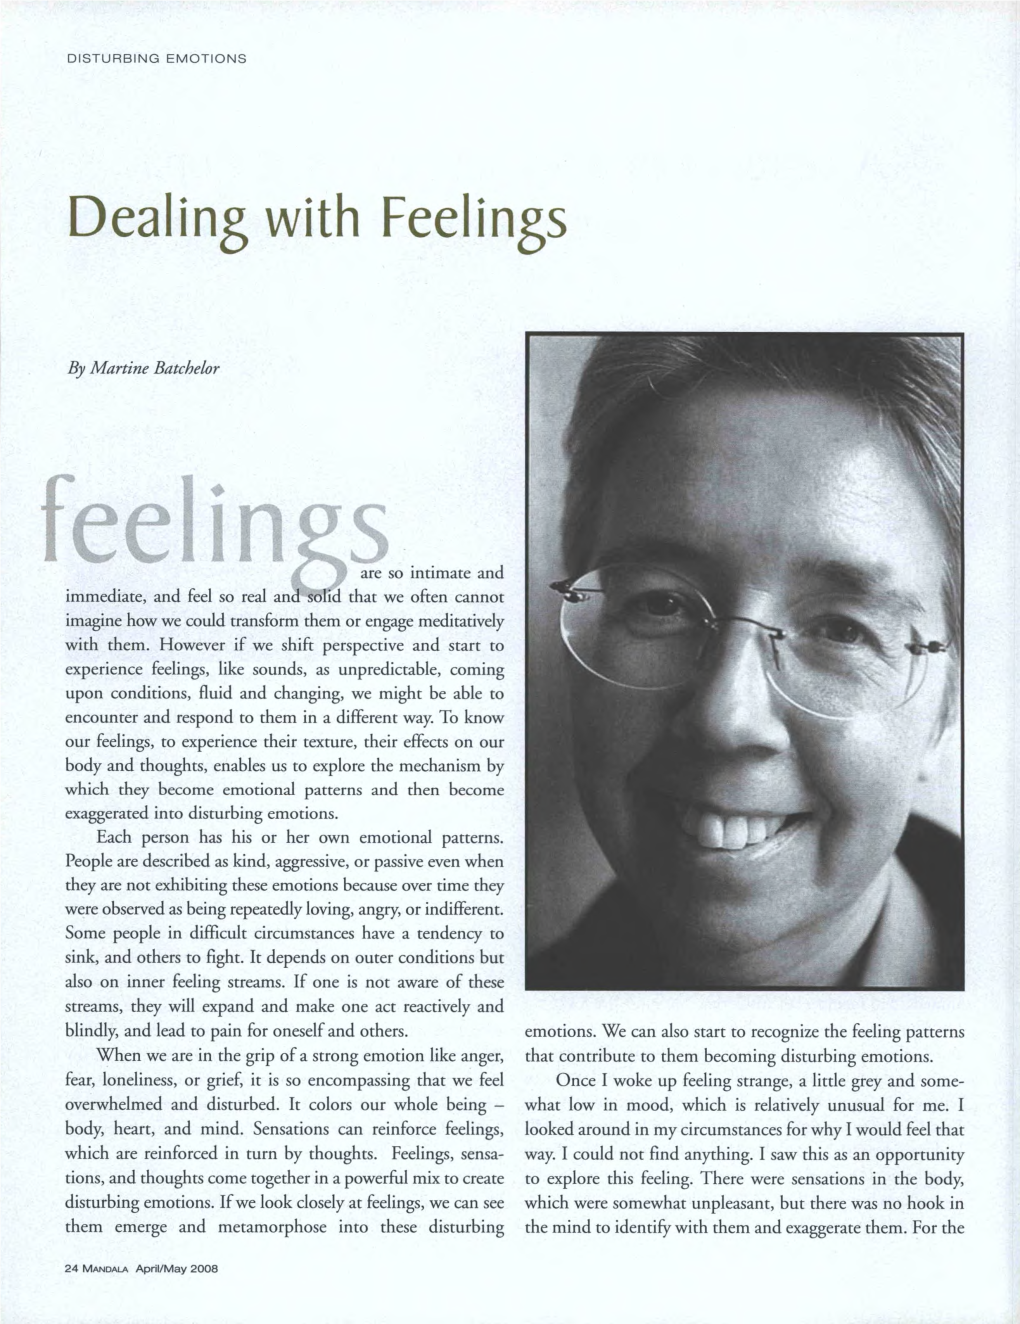 Dealing with Feelings